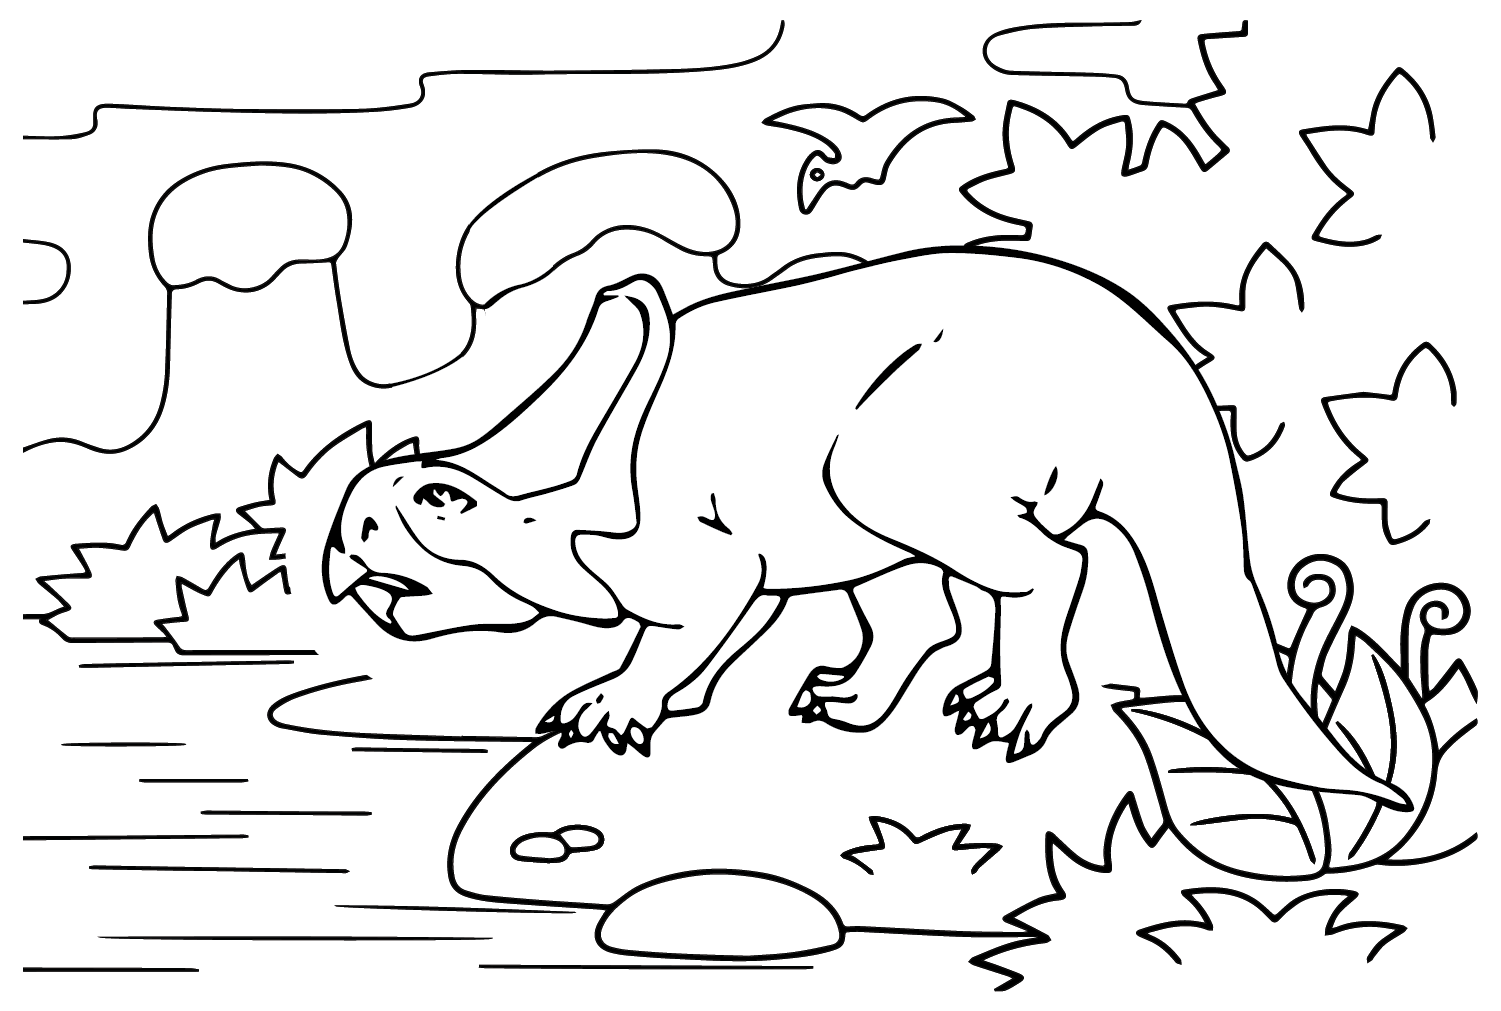 Cartoon-Protoceratops-Malseite von Protoceratops